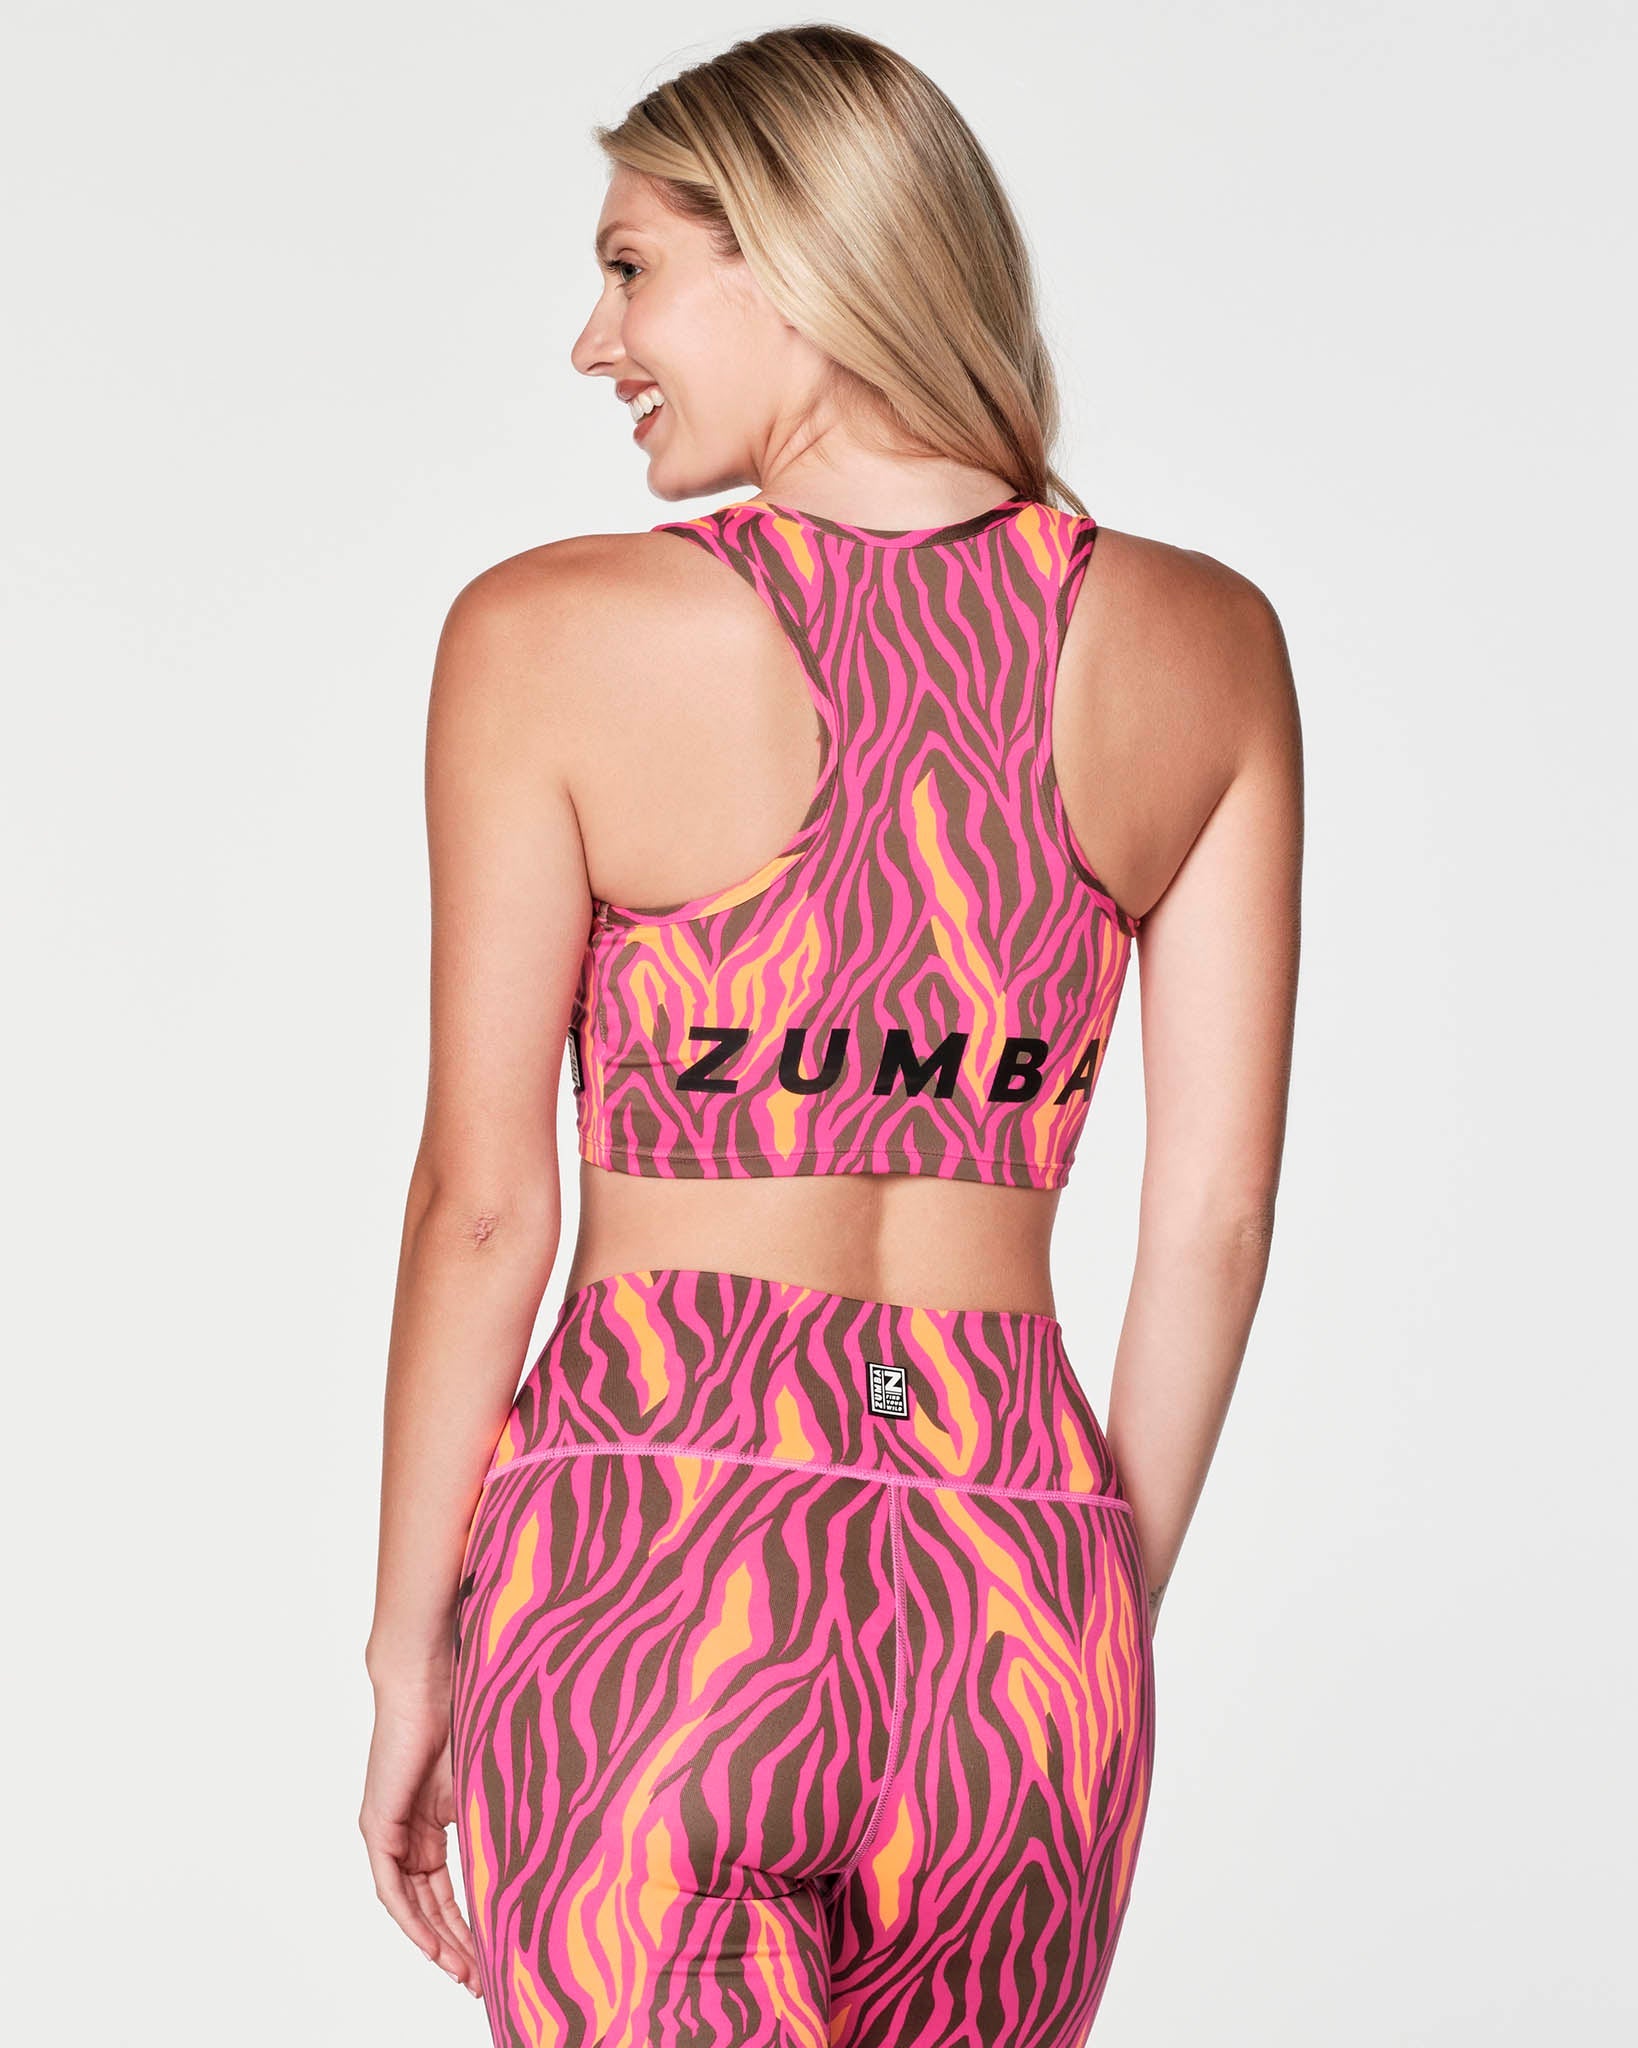 Zumba Slay Like You Mean It Tank Top - Shocking Pink ~ XS S M ~ Free Ship!